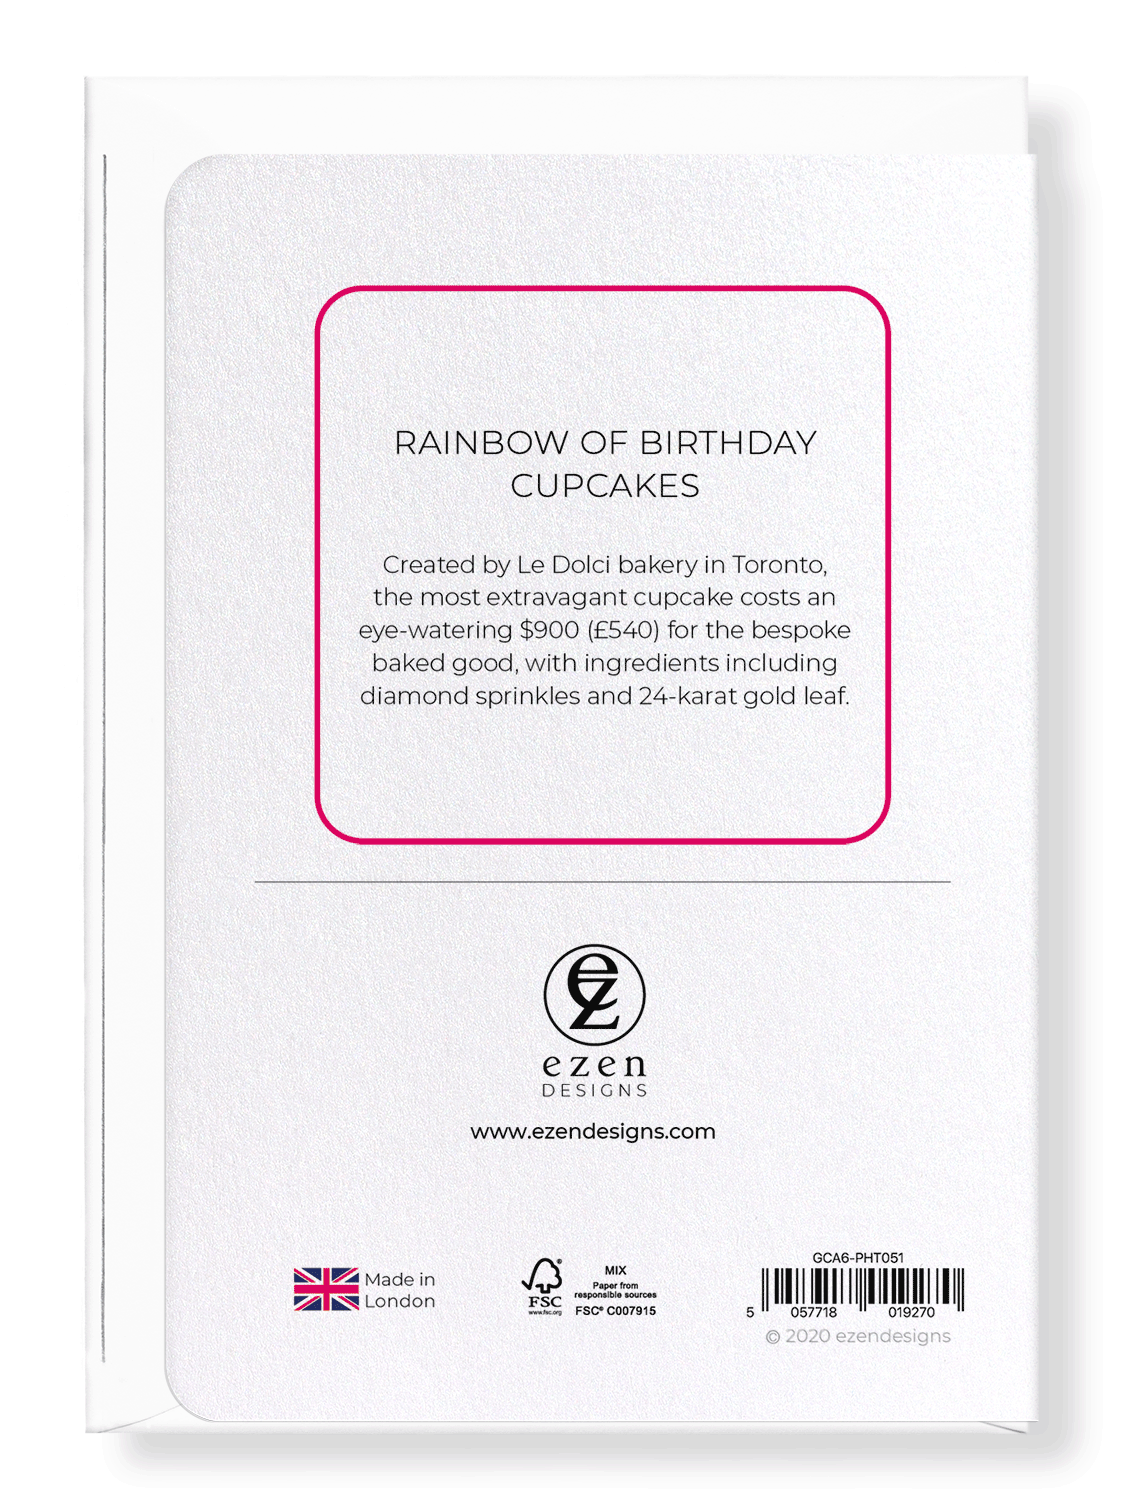 Ezen Designs - Rainbow of birthday cupcakes - Greeting Card - Back